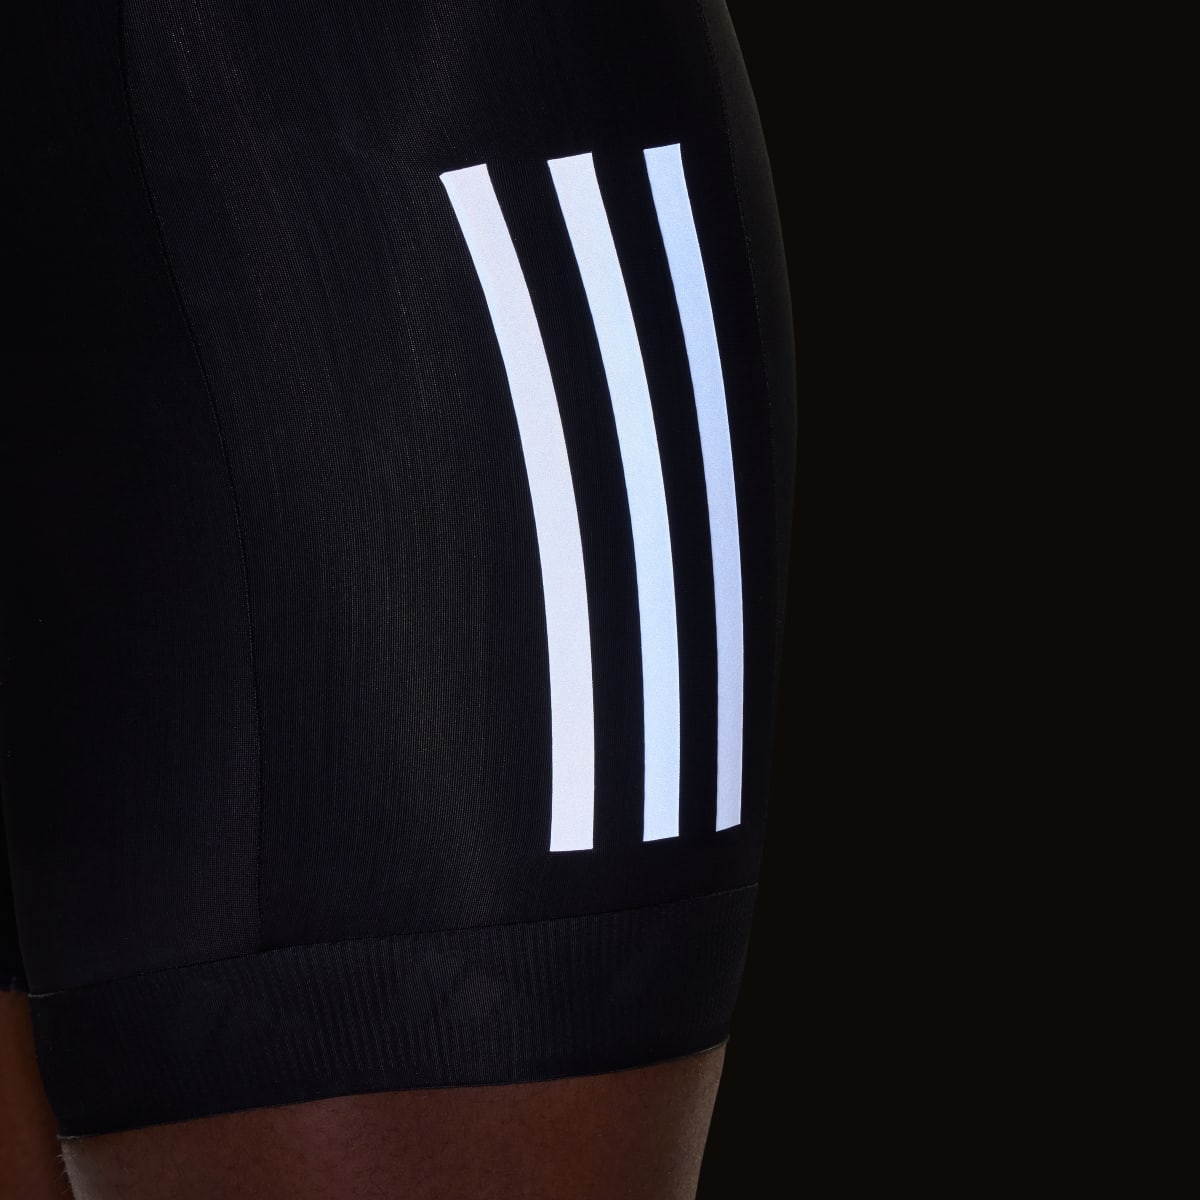 Adidas Essentials 3-Stripes Padded Cycling Bib Shorts. 8